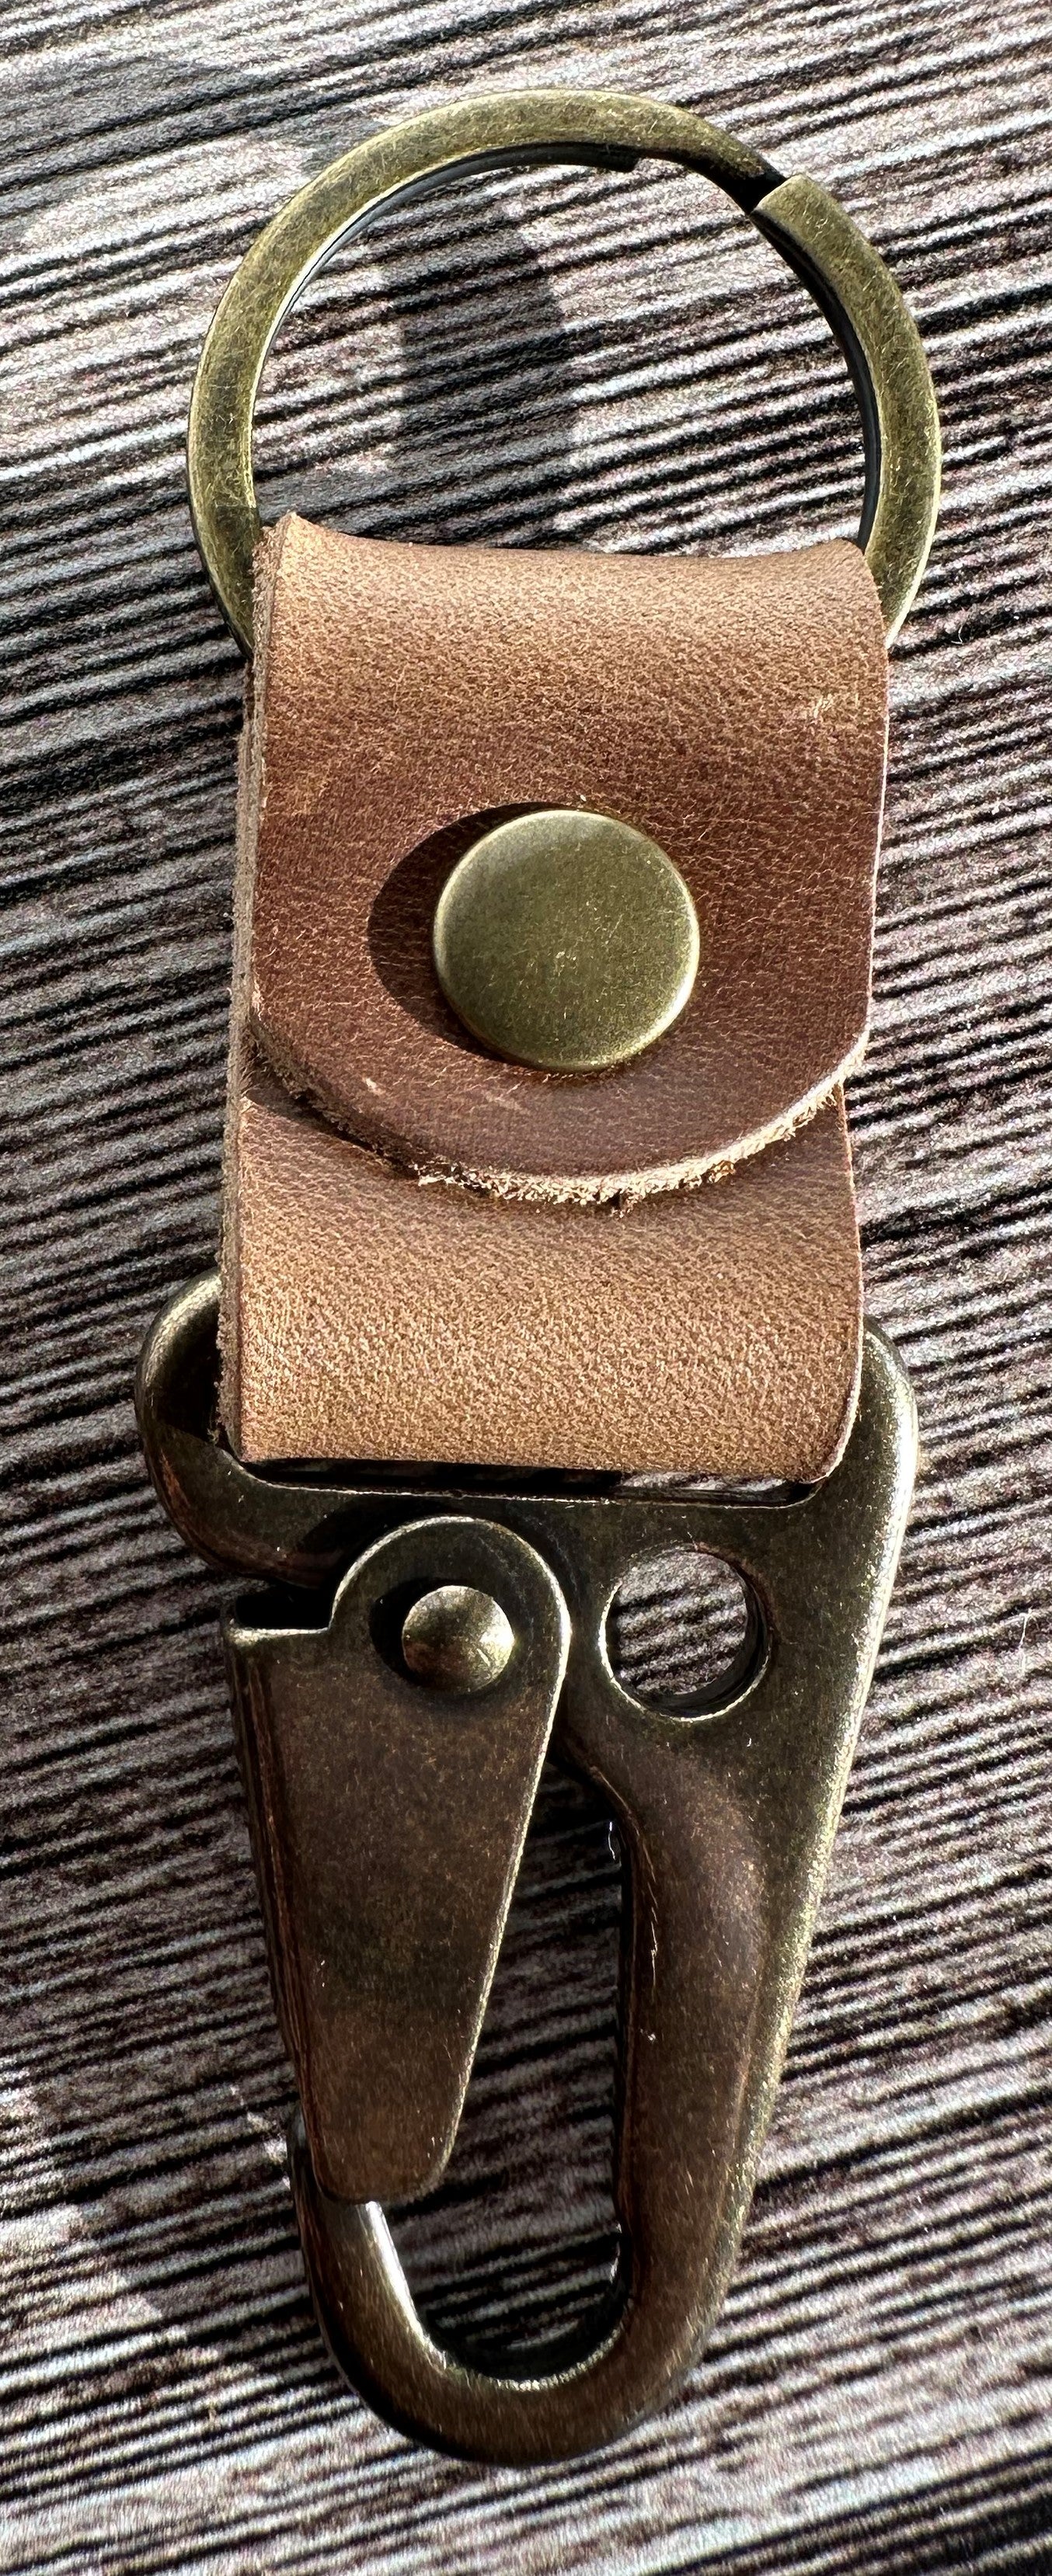 Genuine Leather Men's Key Holder Double Zip Around 6 Key Chain Wallet Case Tan